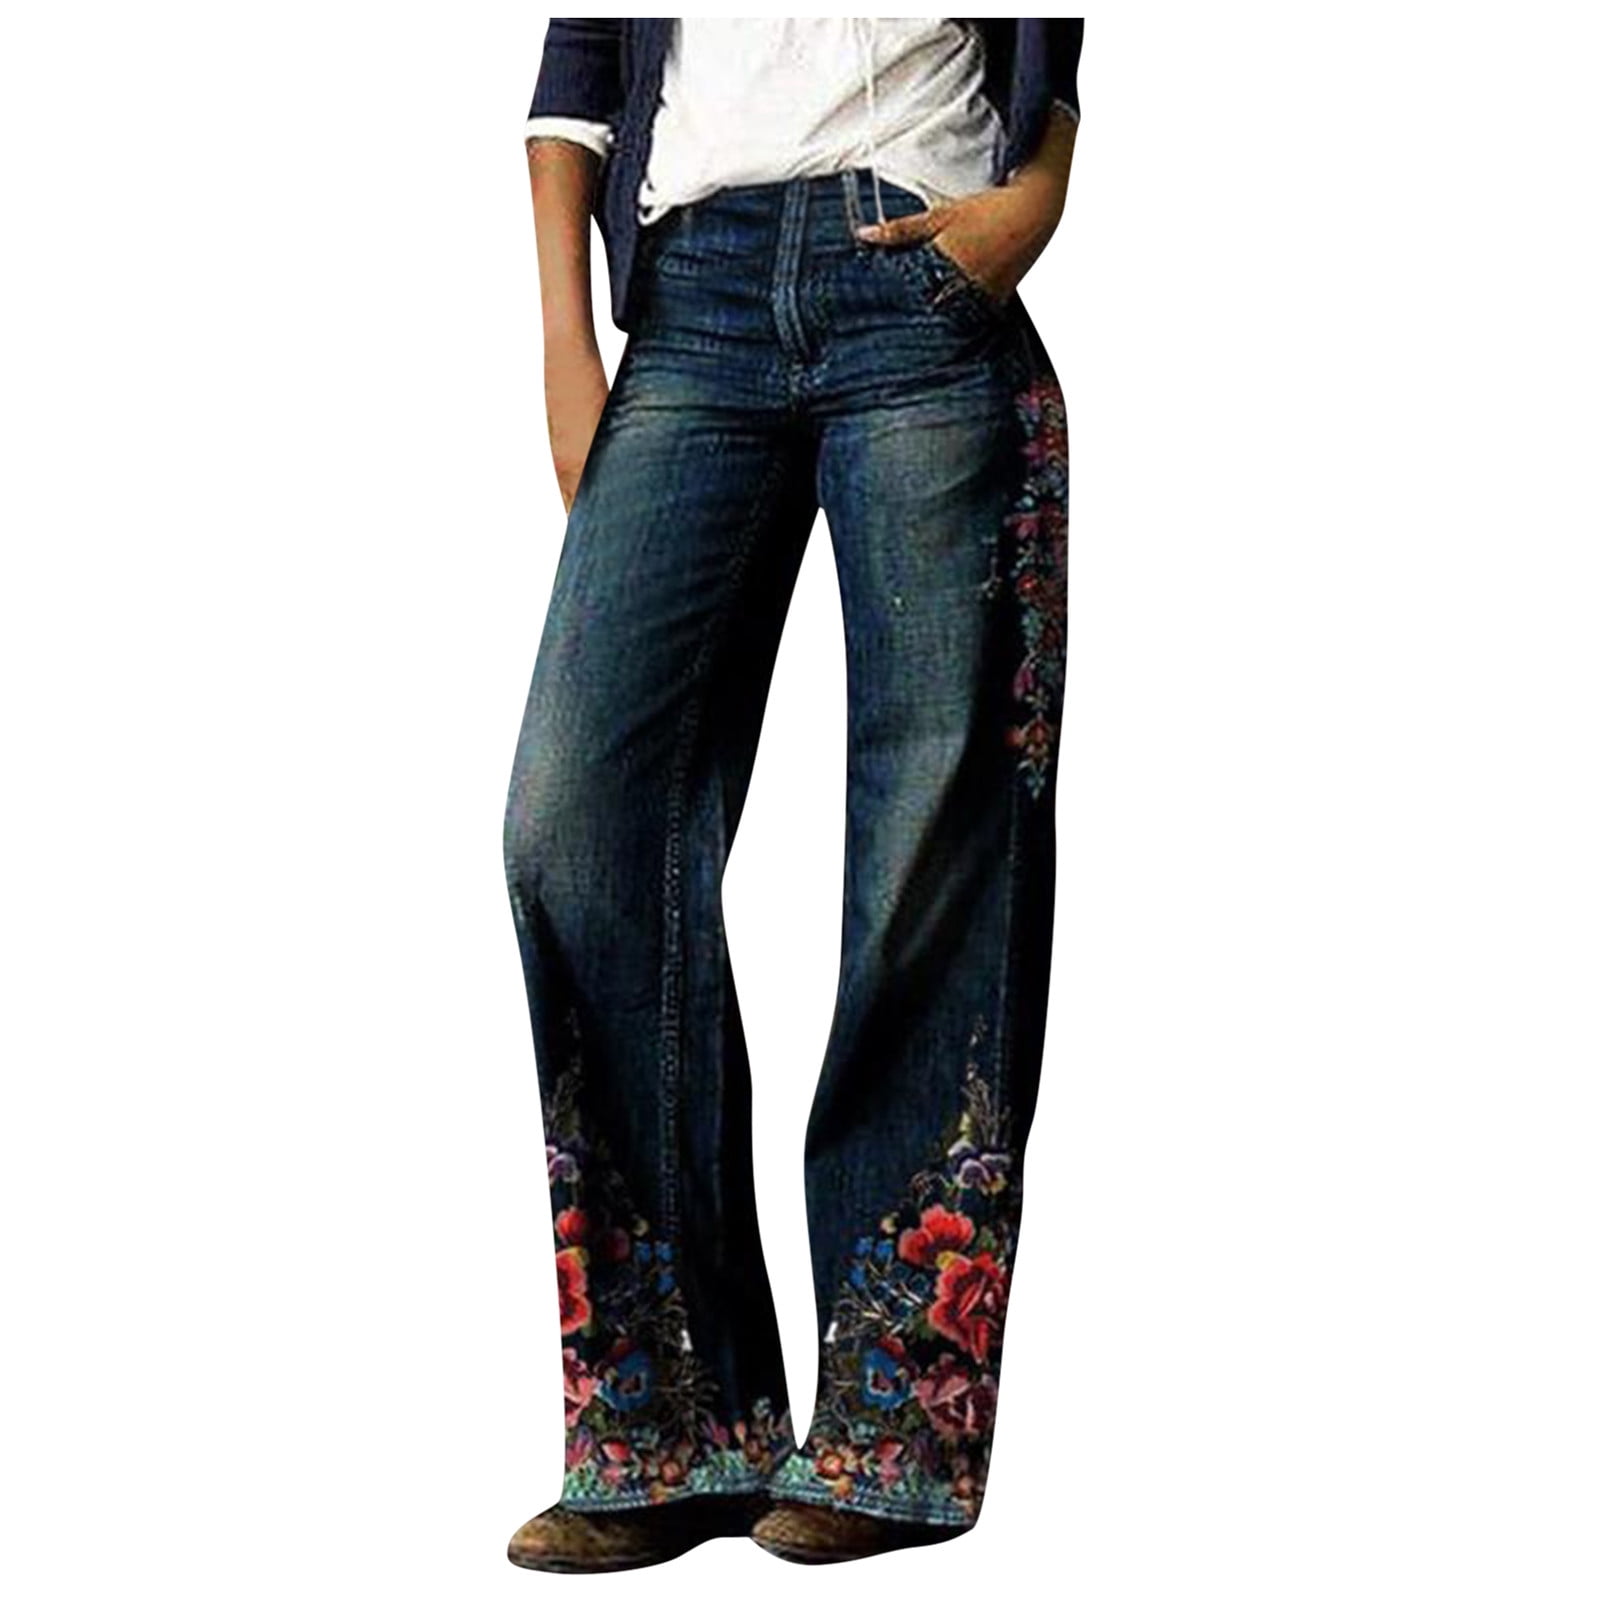 Dndnchun Women Fashion Printed Jeans Casual Long Pants